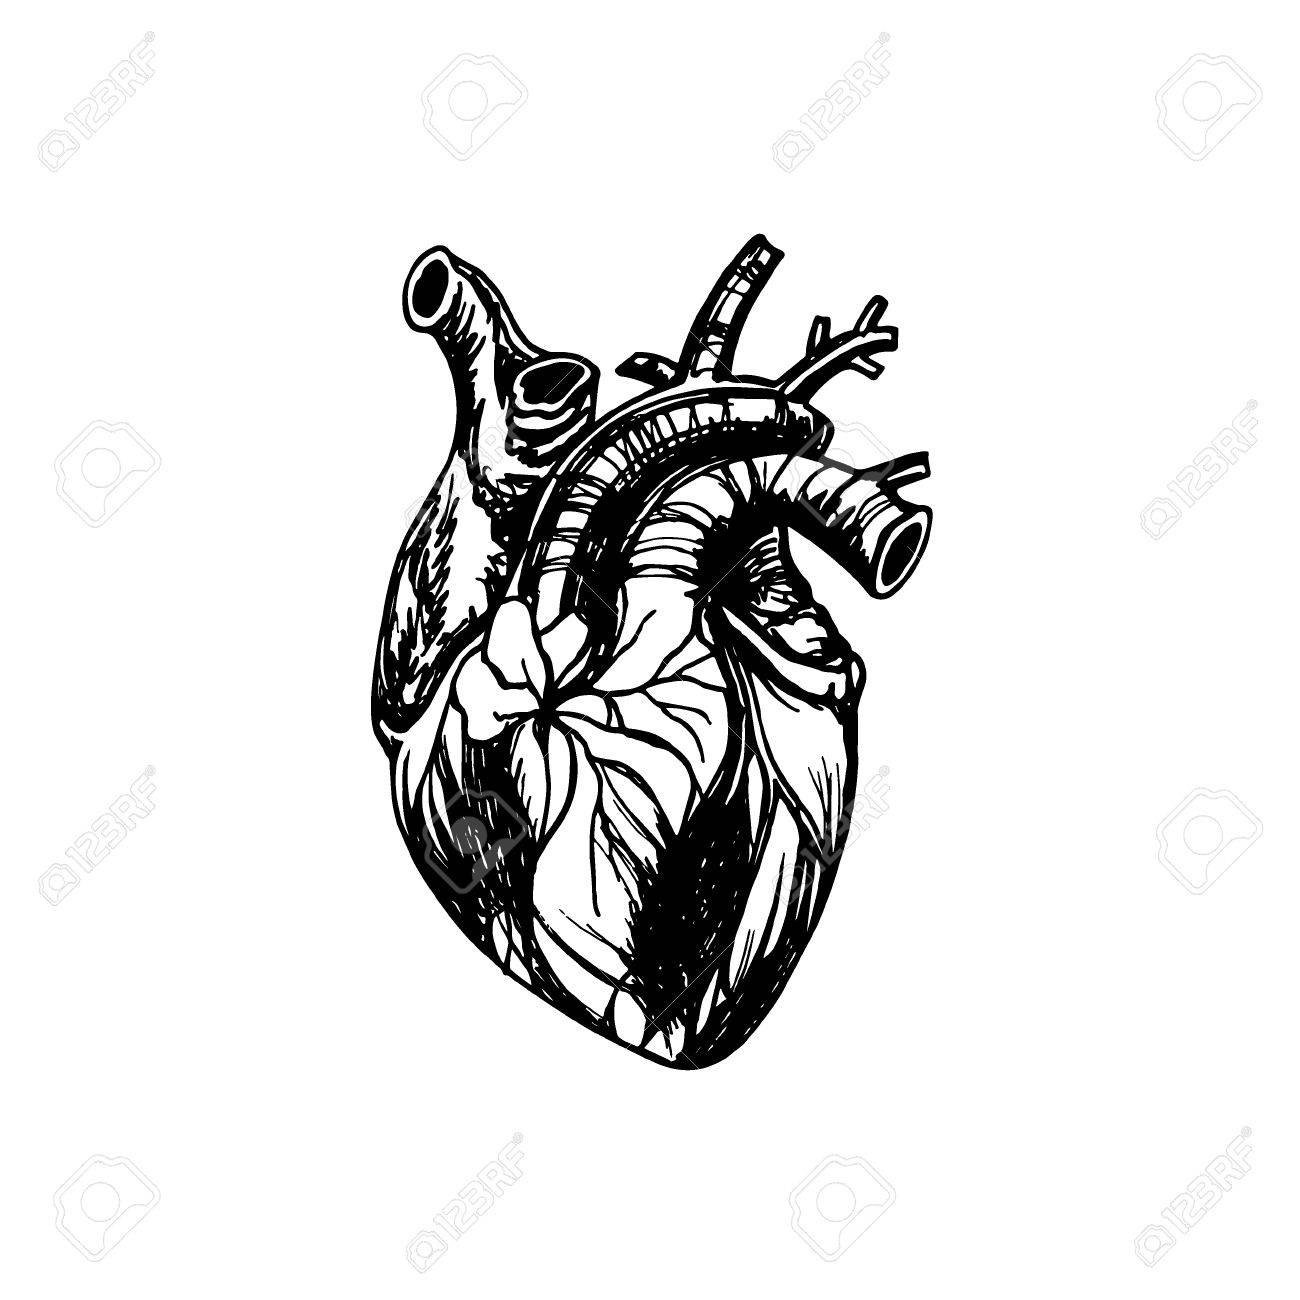 Human Heart Anatomy Drawing at GetDrawings | Free download